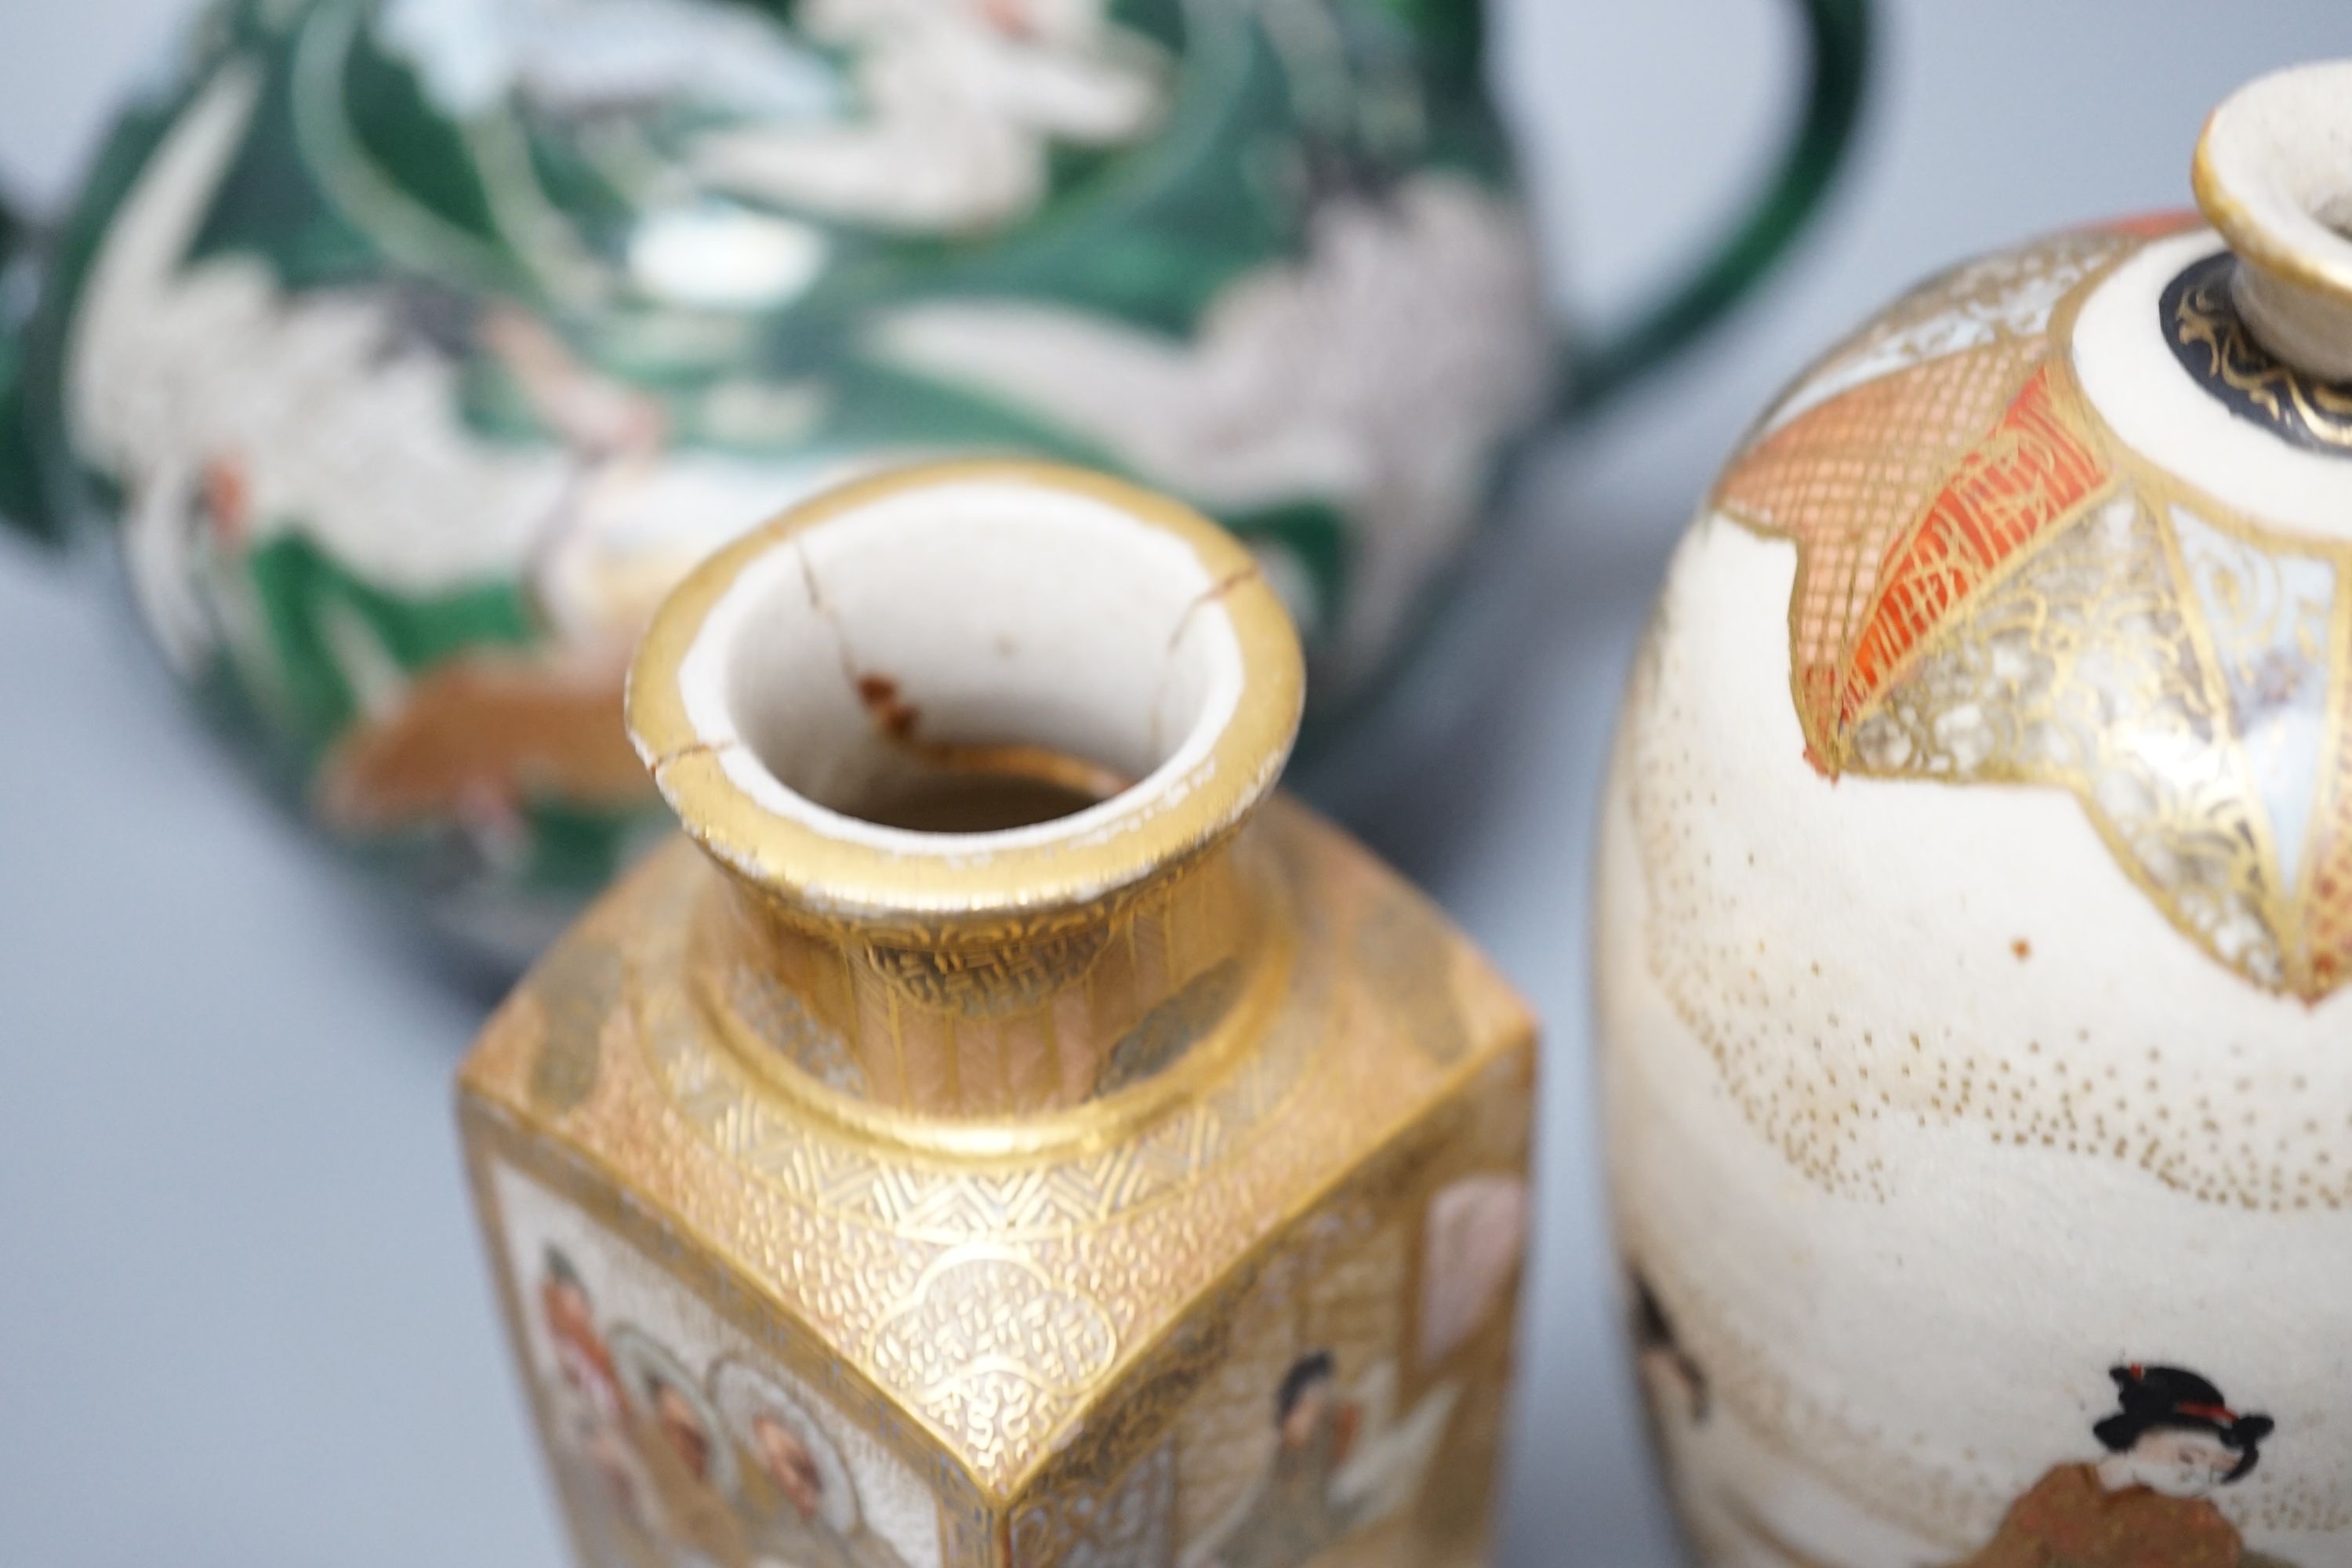 Japanese Satsuma and Fukagawa wares, Meiji period, teapot 10cm high